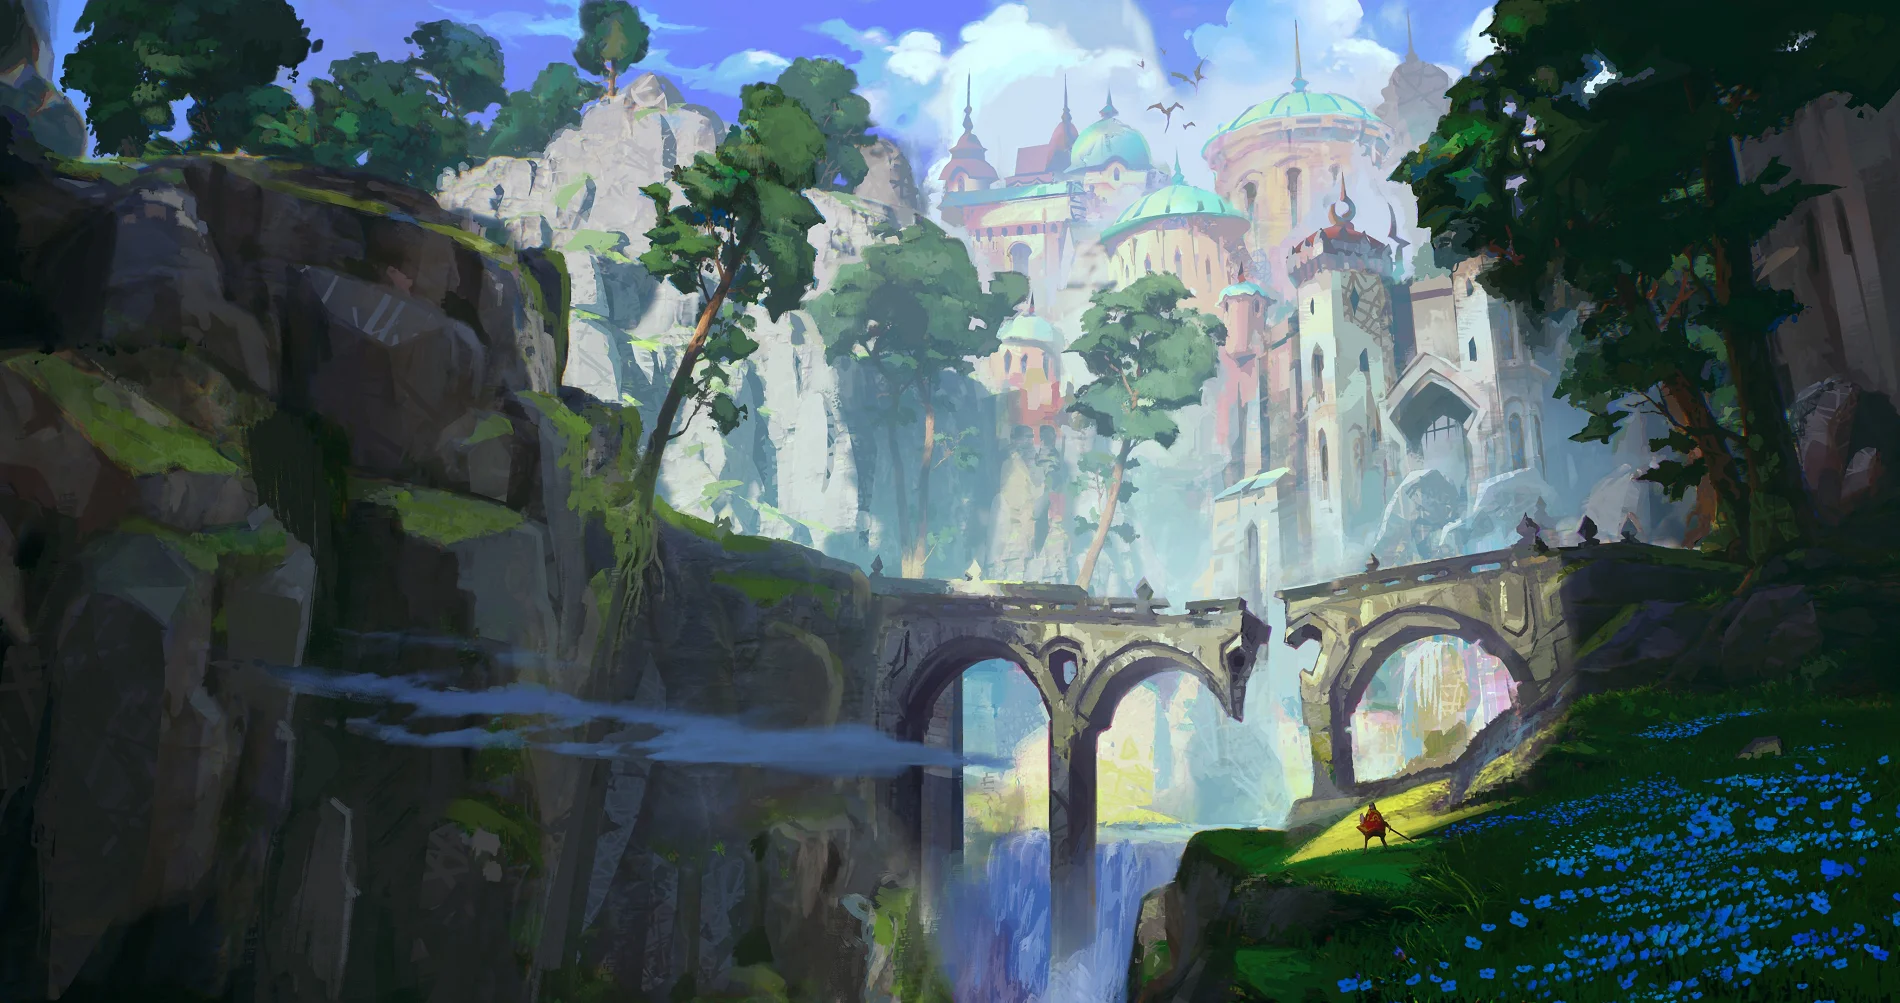 Cтудия творческого руководителя Dragon Age скоро представит свою дебютную игру - фото 2